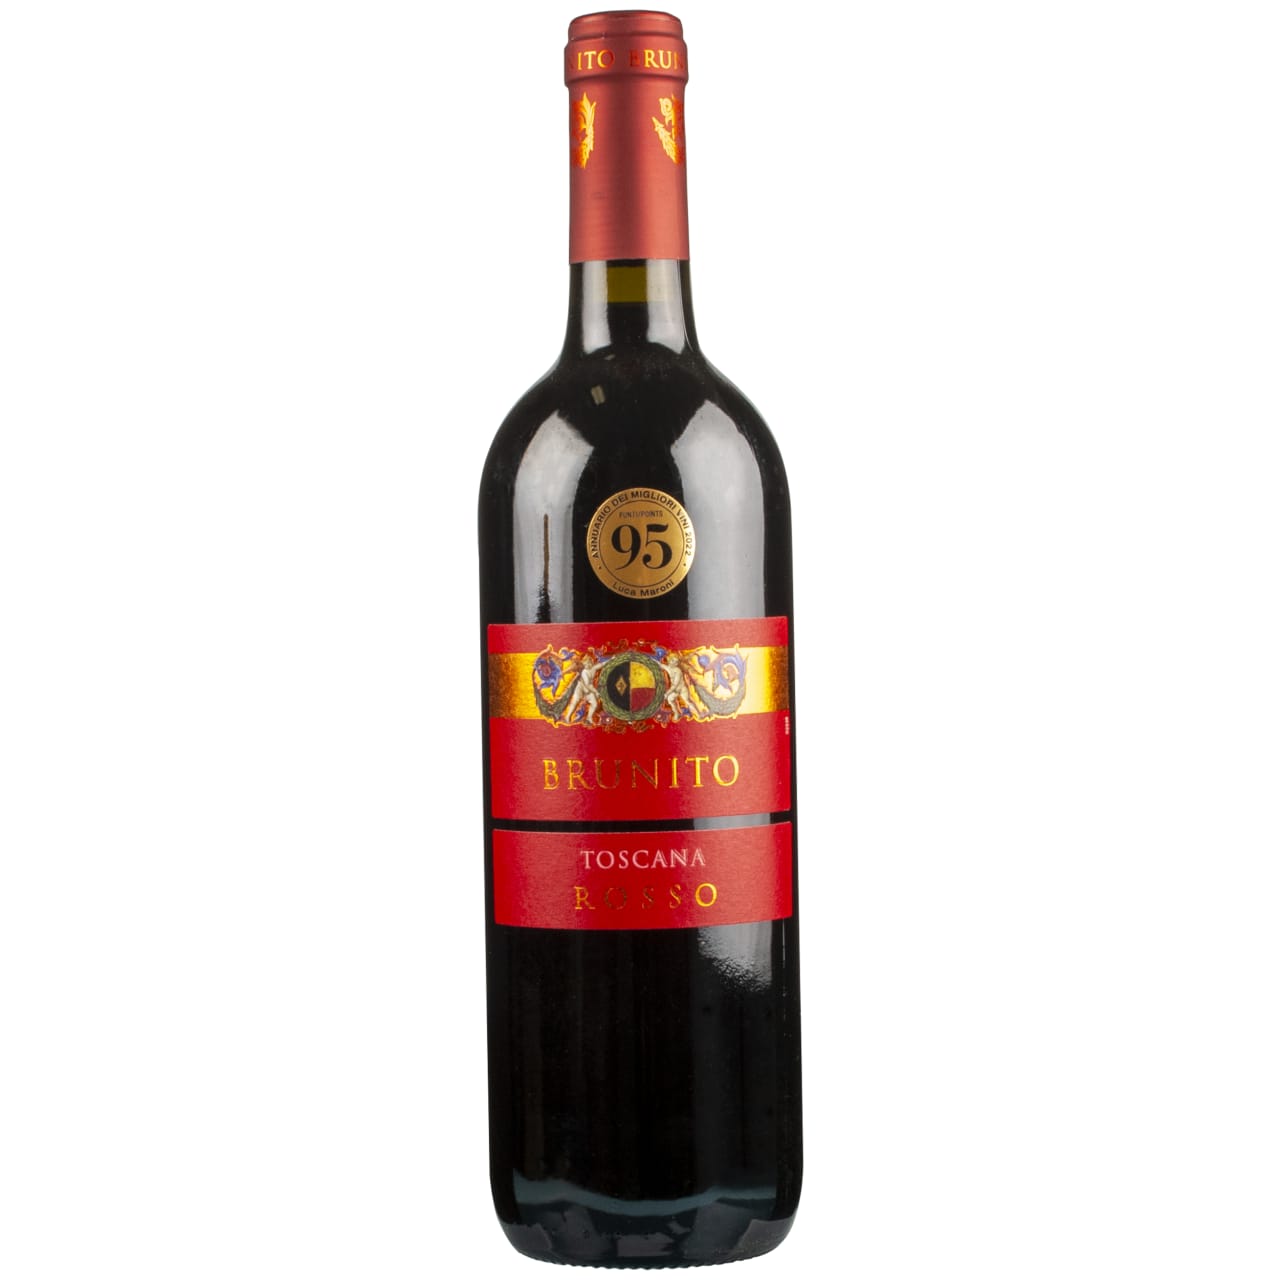 Brunito Rosso Toscana IGT, Cantine Leonardo Da Vinci – Suburban BottleStore